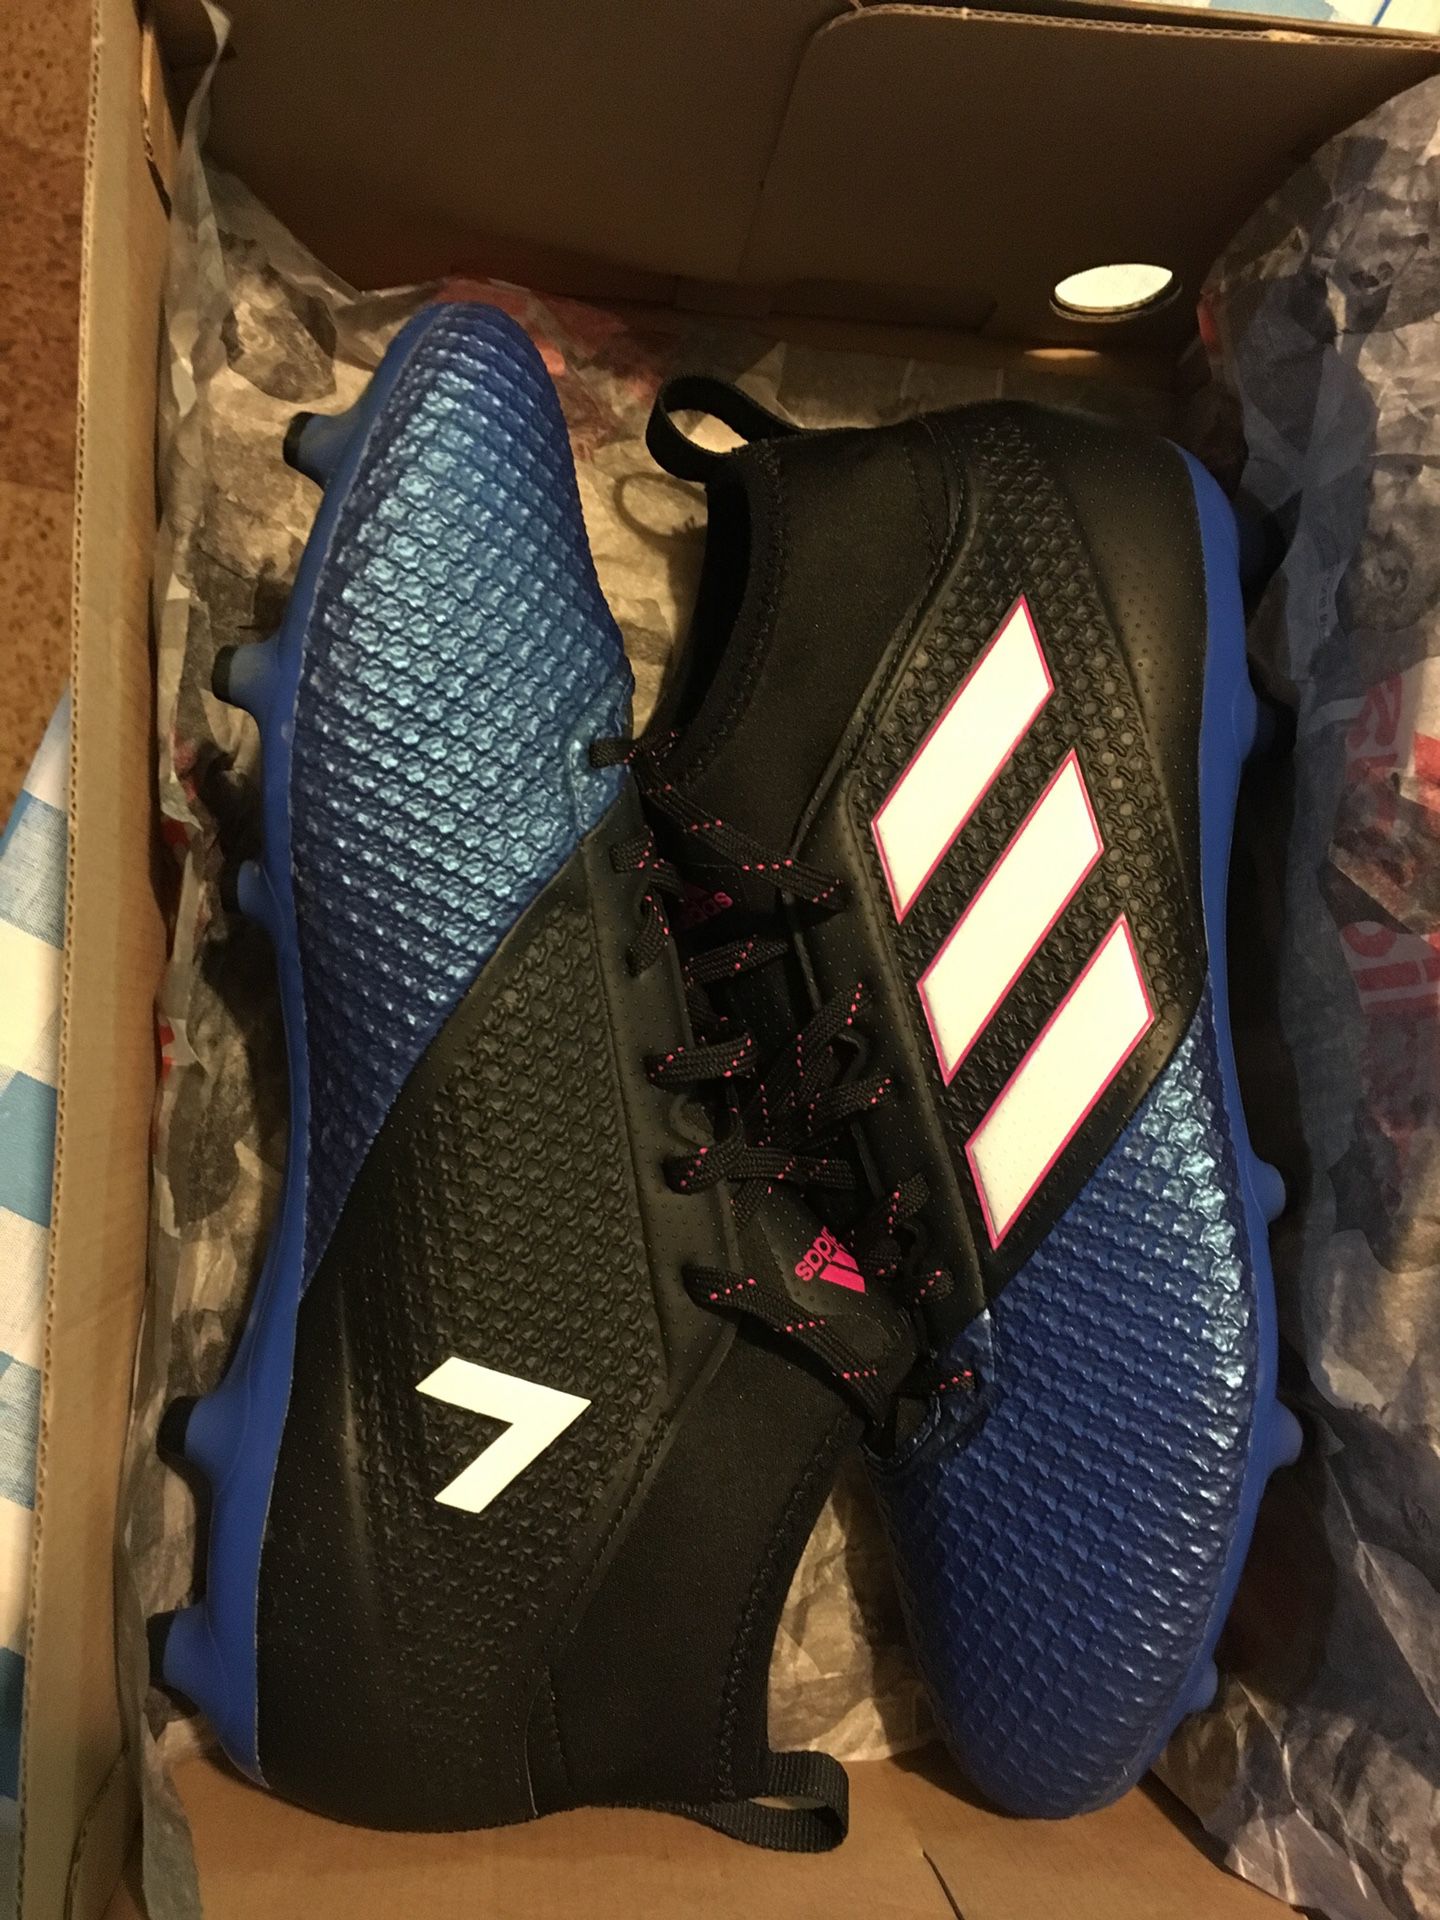 Adidas Ace 17.3 Primemesh FG Soccer Cleats- Black/Blue - US 9.5 *NEW*